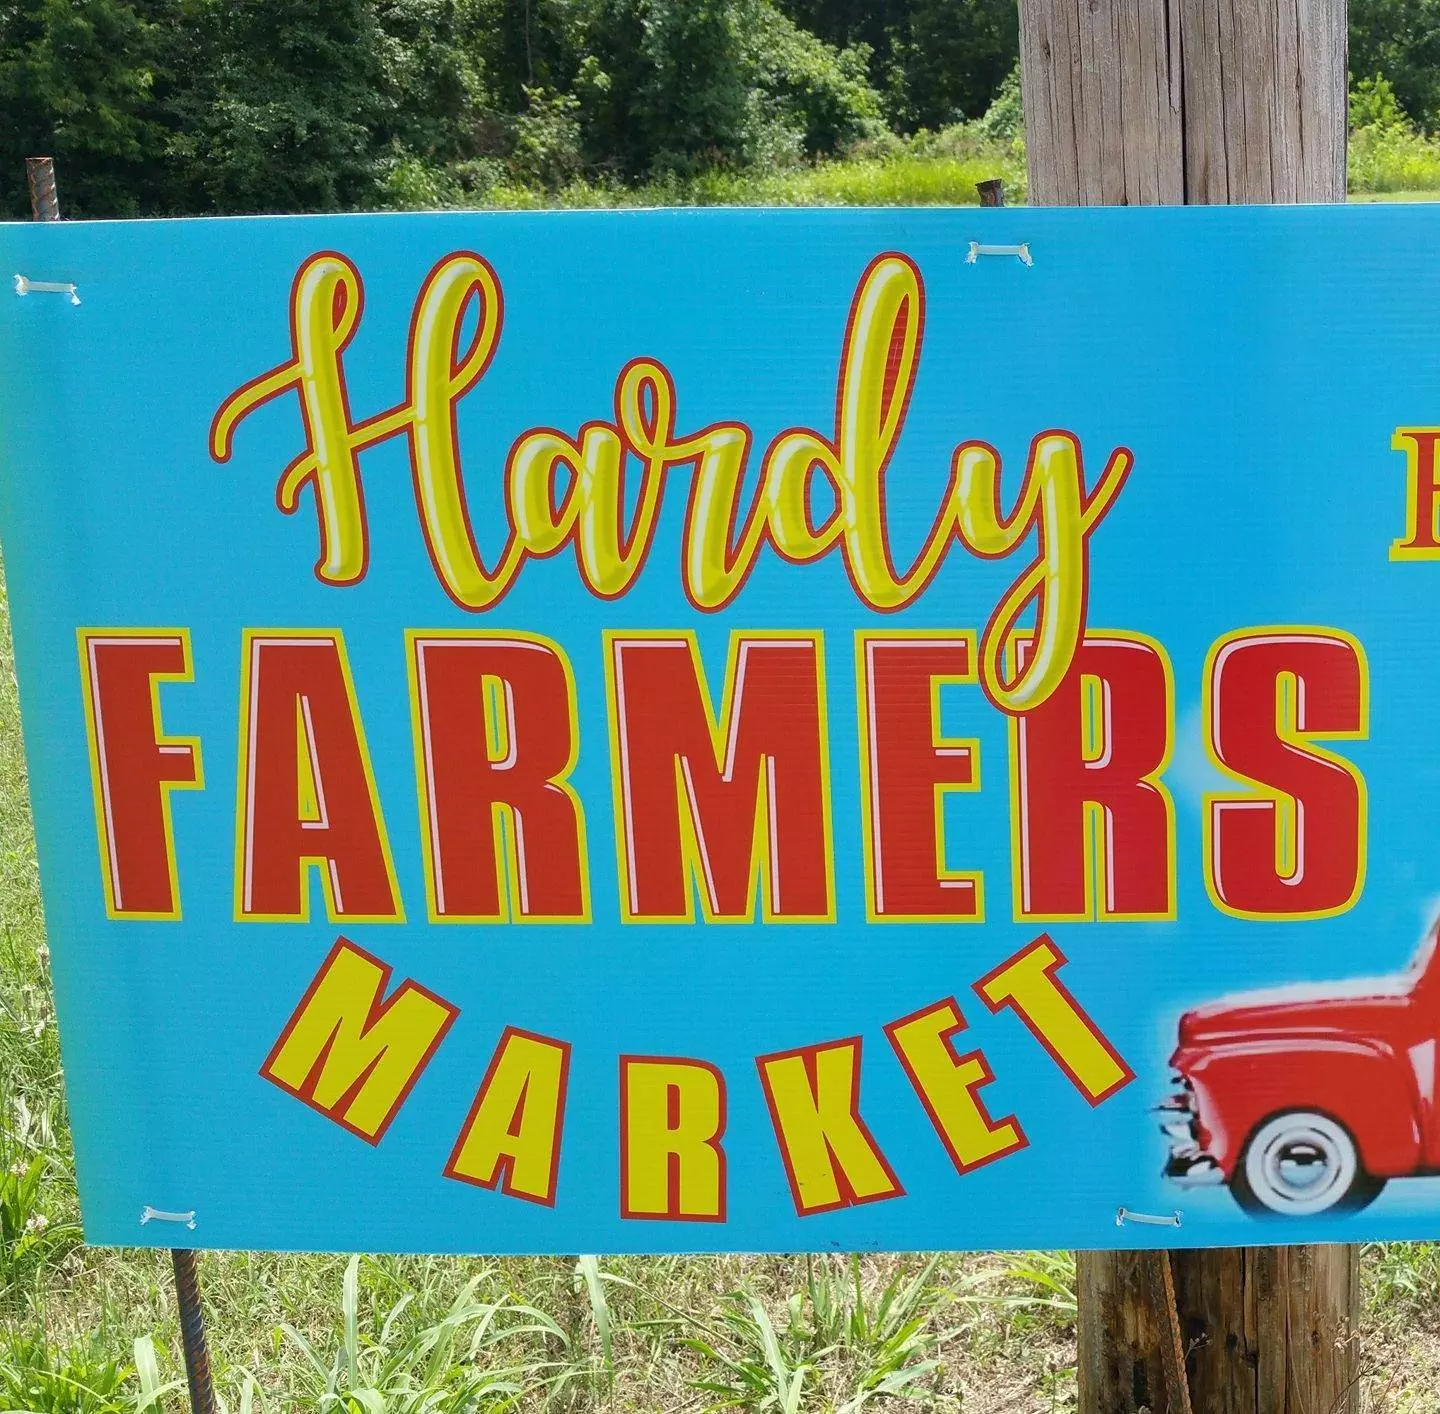 Hardy Farmers Market Open Saturdays Hallmark Times 